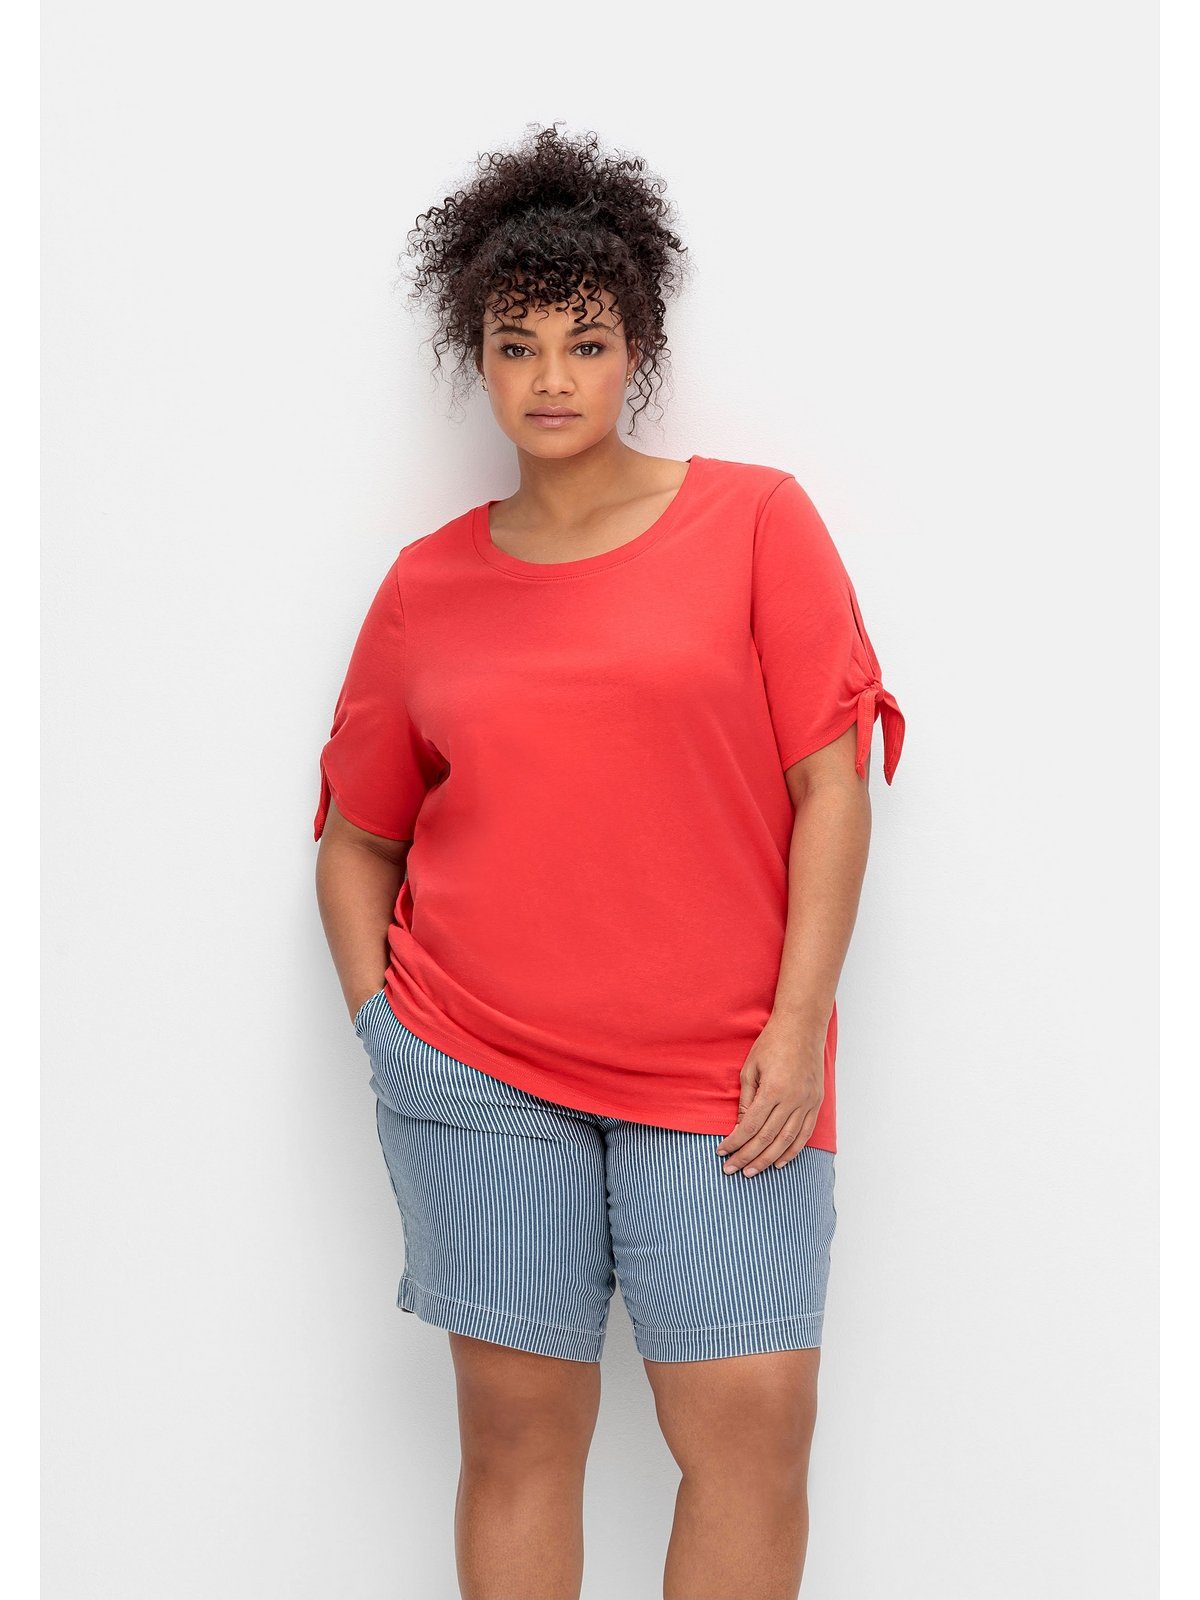 Sheego T-Shirt Große Größen mit Knotendetail am Ärmelsaum rot